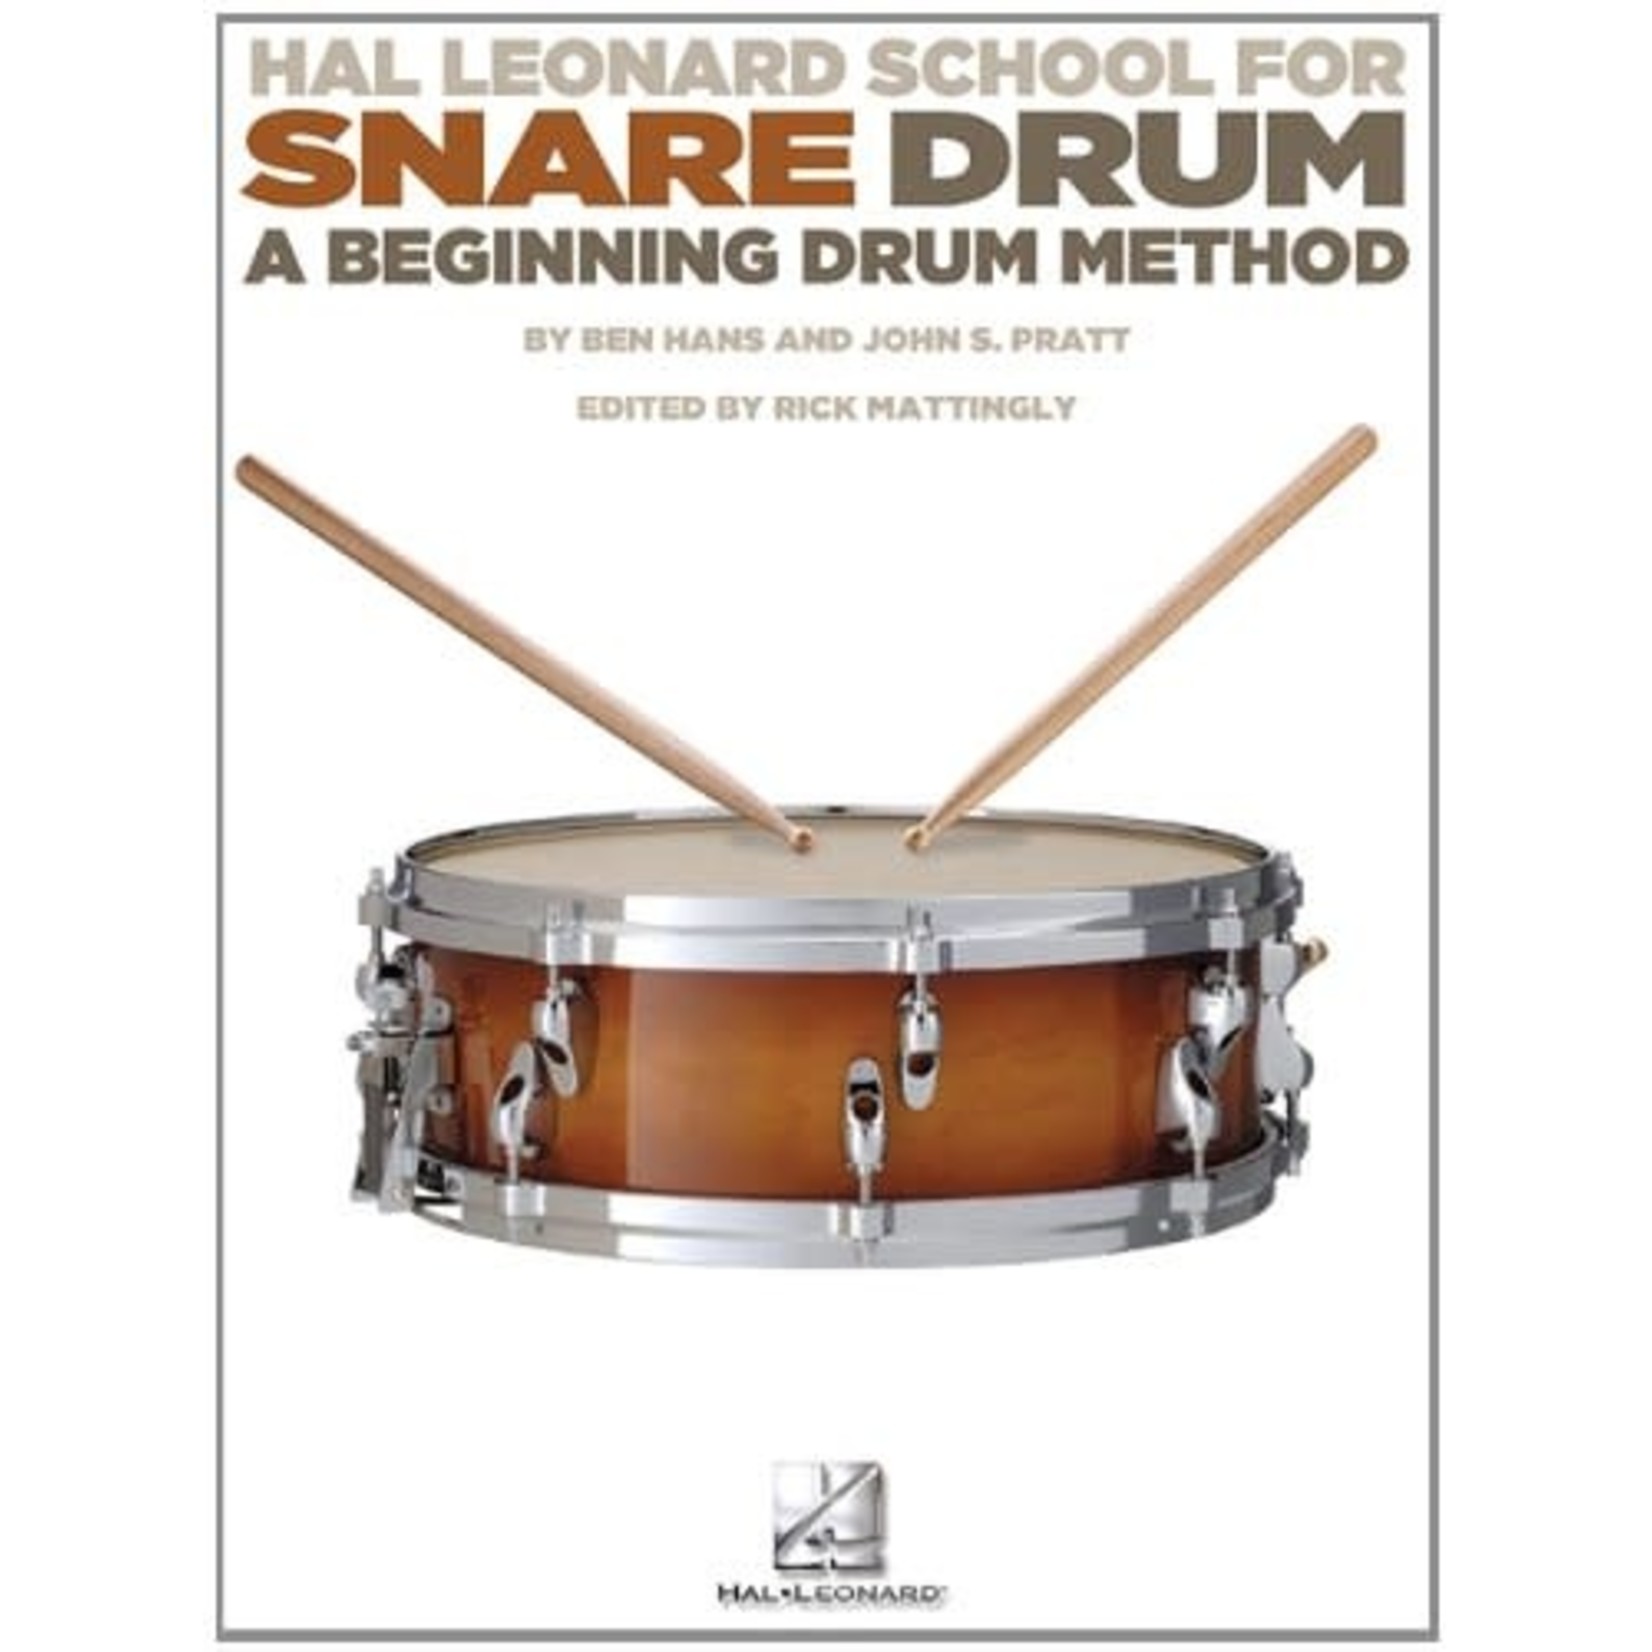 Hal Leonard Hal Leonard School for Snare Drum A Beginning Drum Method - Ben Hans & John S. Pratt